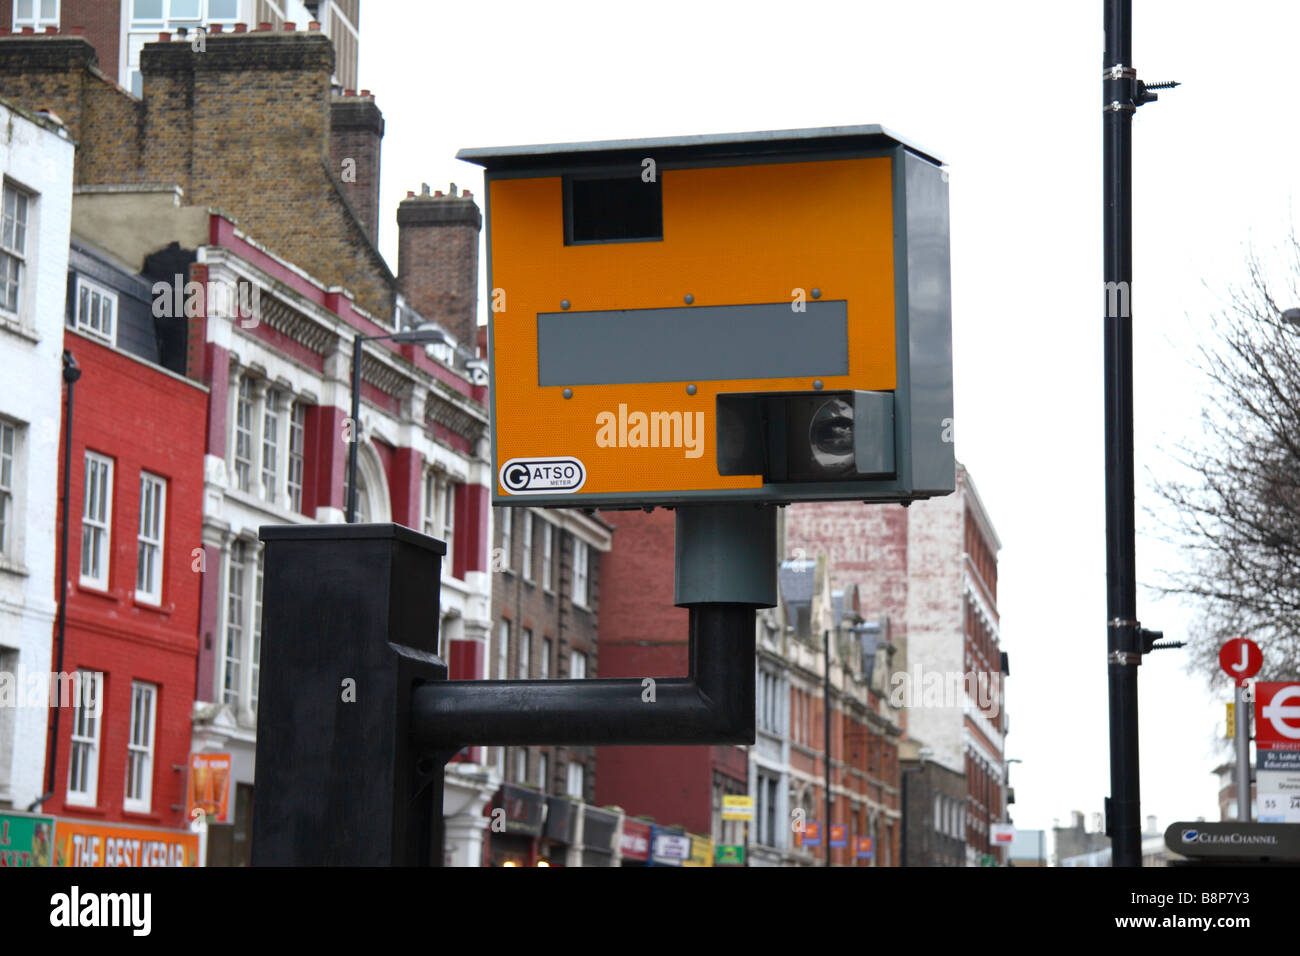 A Gatso speed camera on Old Street London.  Reb 2009 Stock Photo